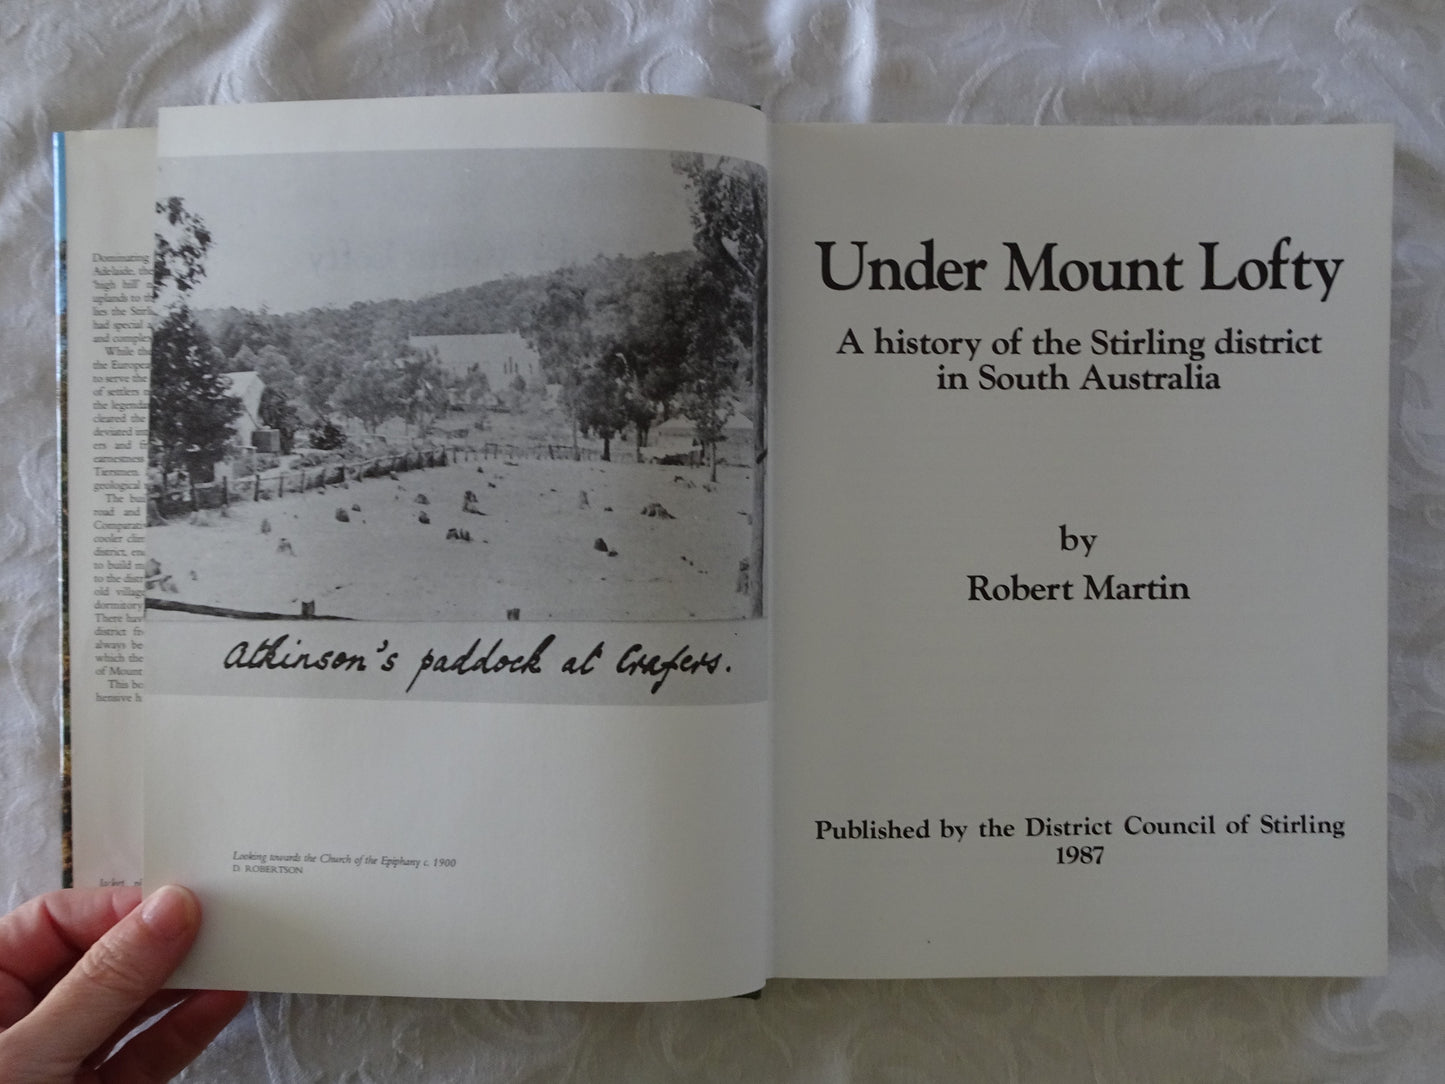 Under Mount Lofty by Robert Martin